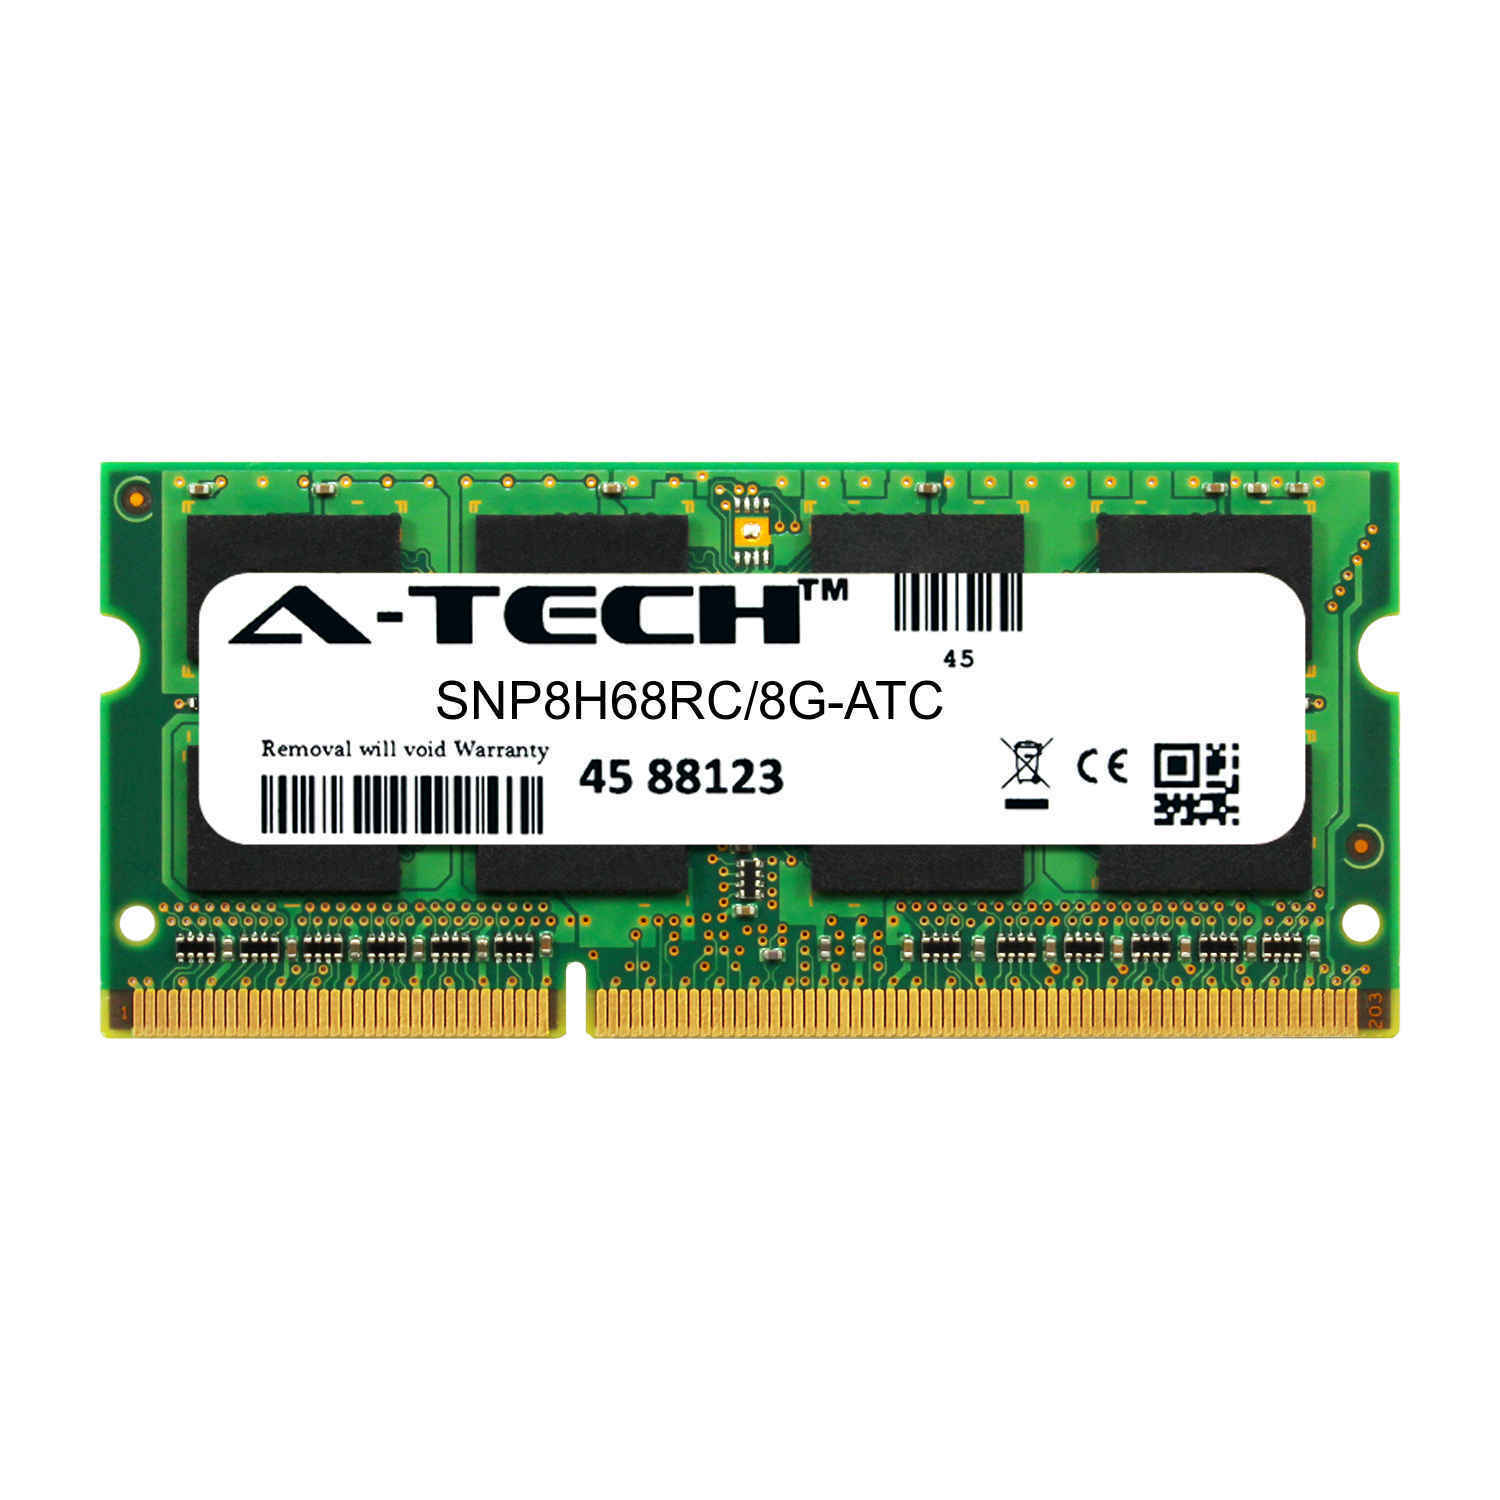 8GB DDR3 PC3-12800 1600MHz SODIMM (Dell SNP8H68RC/8G Equivalent) Memory RAM